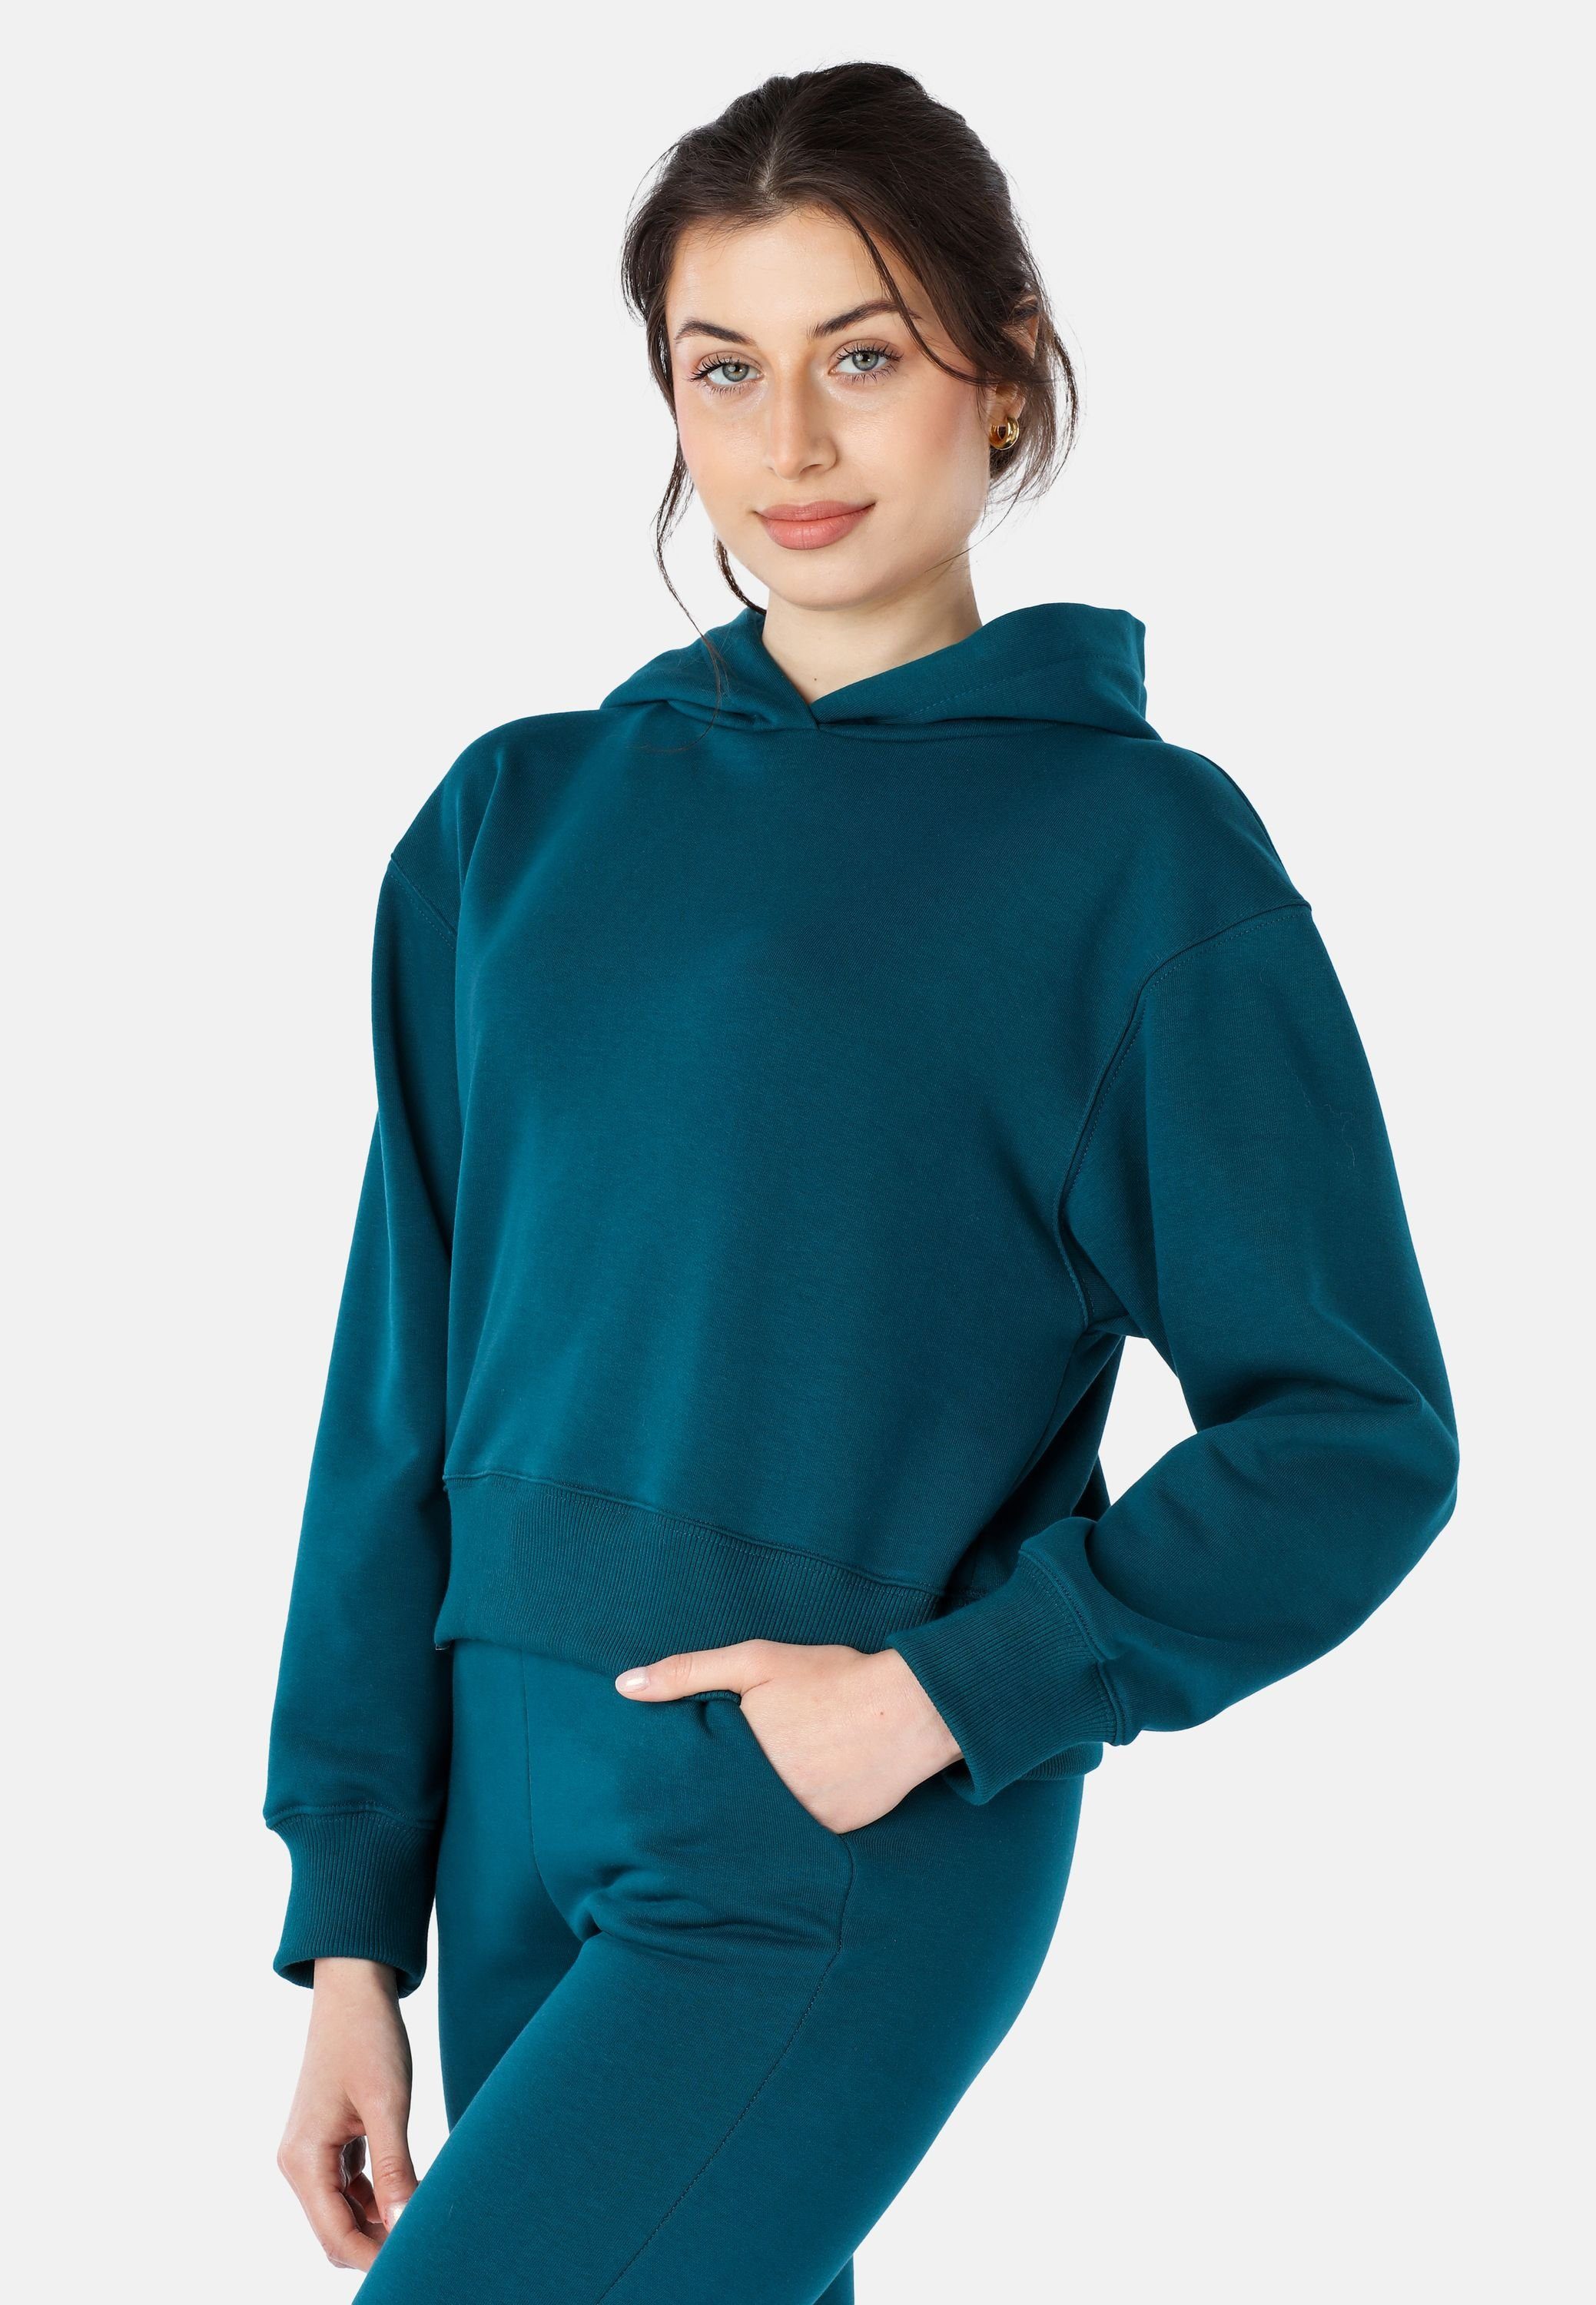 Damen Kapuzensweatshirt kurz BLV208 Jogging Sportanzug Kapuzenpullover Smaragdgrün Pullover Oberteil Bellivalini